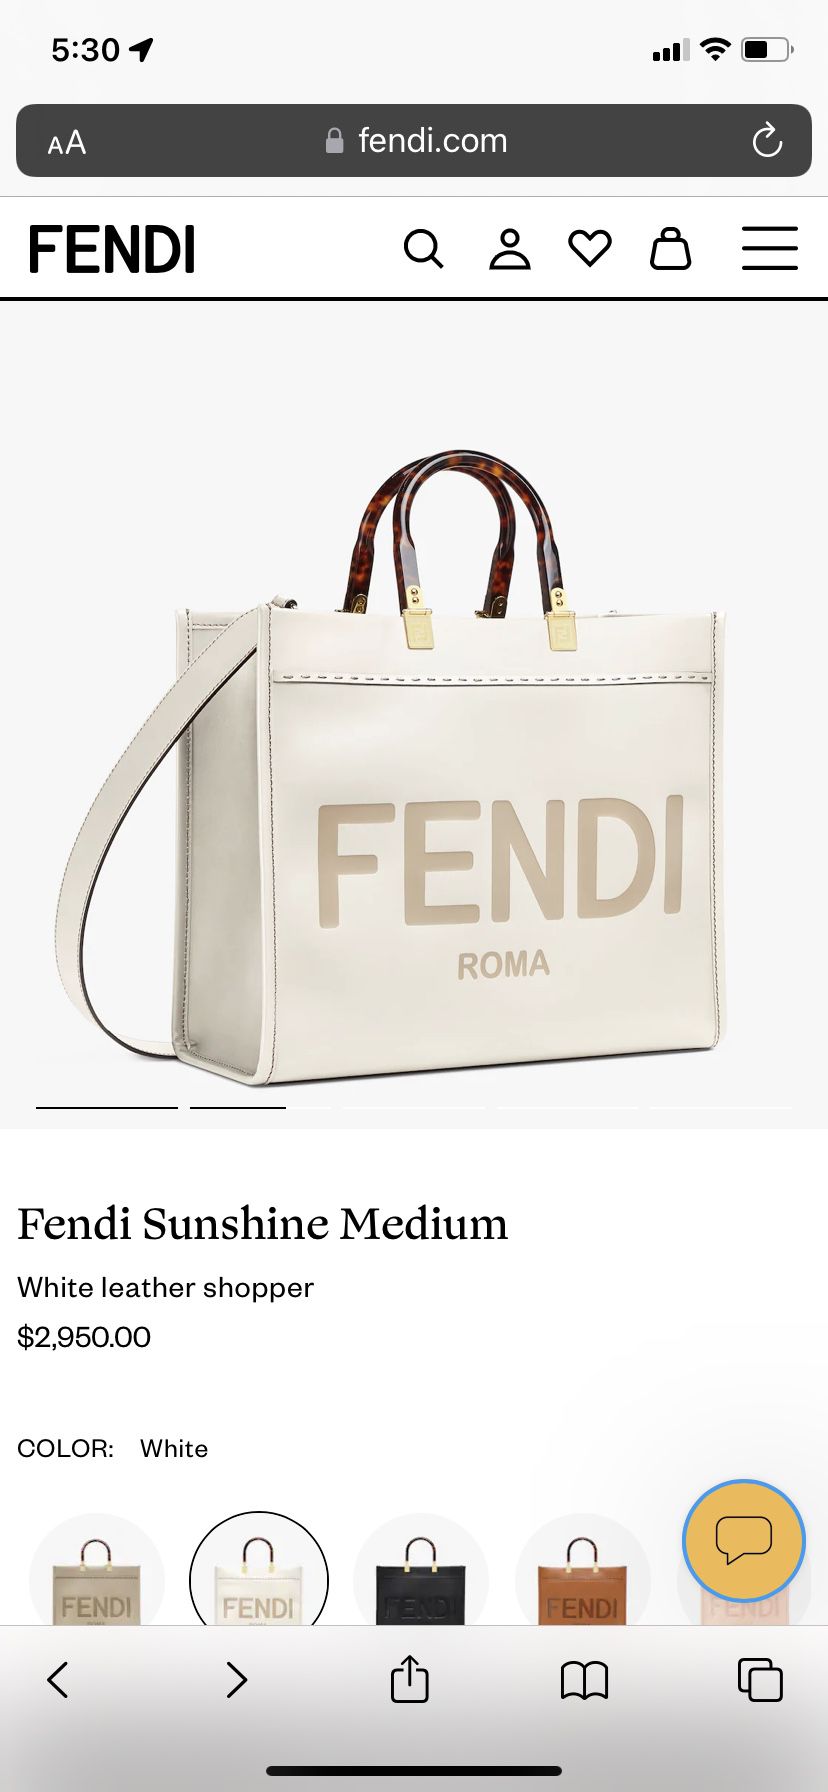 Fendi Sunshine Medium - White leather shopper